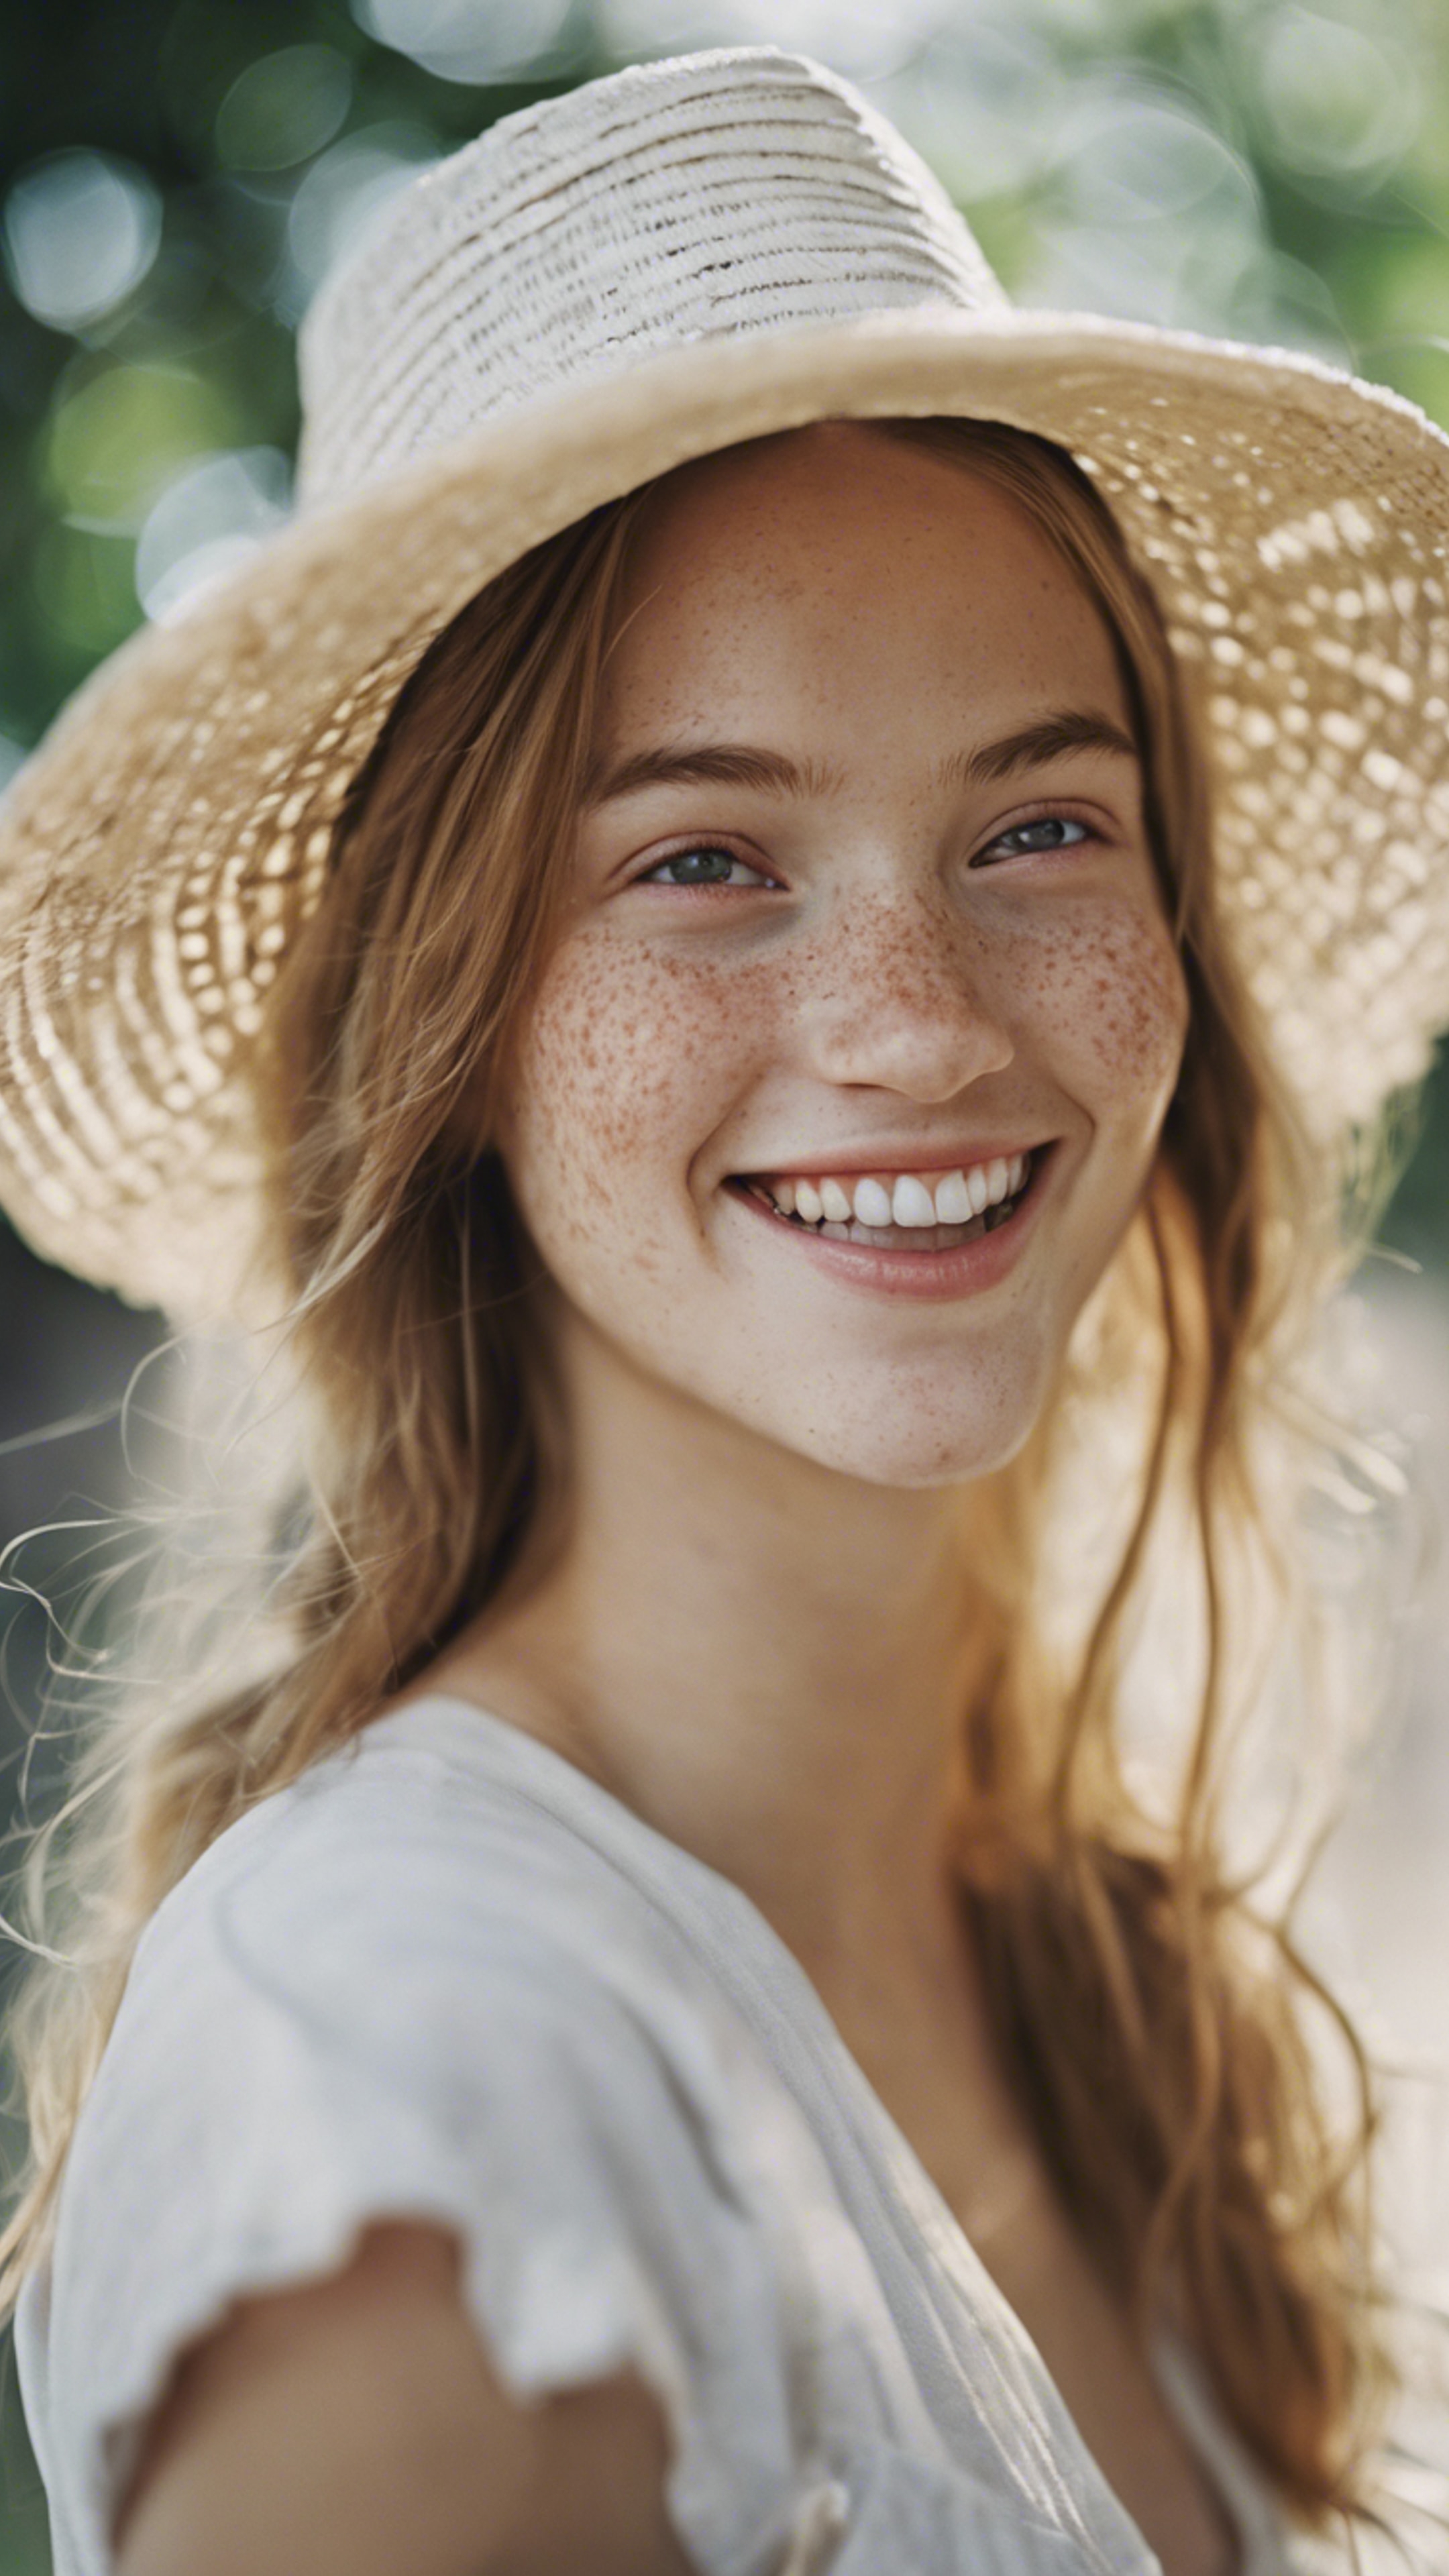 A portrait of a cute girl with freckles and a big smile, wearing a white straw hat. duvar kağıdı[344e43c9fe594ea98e55]